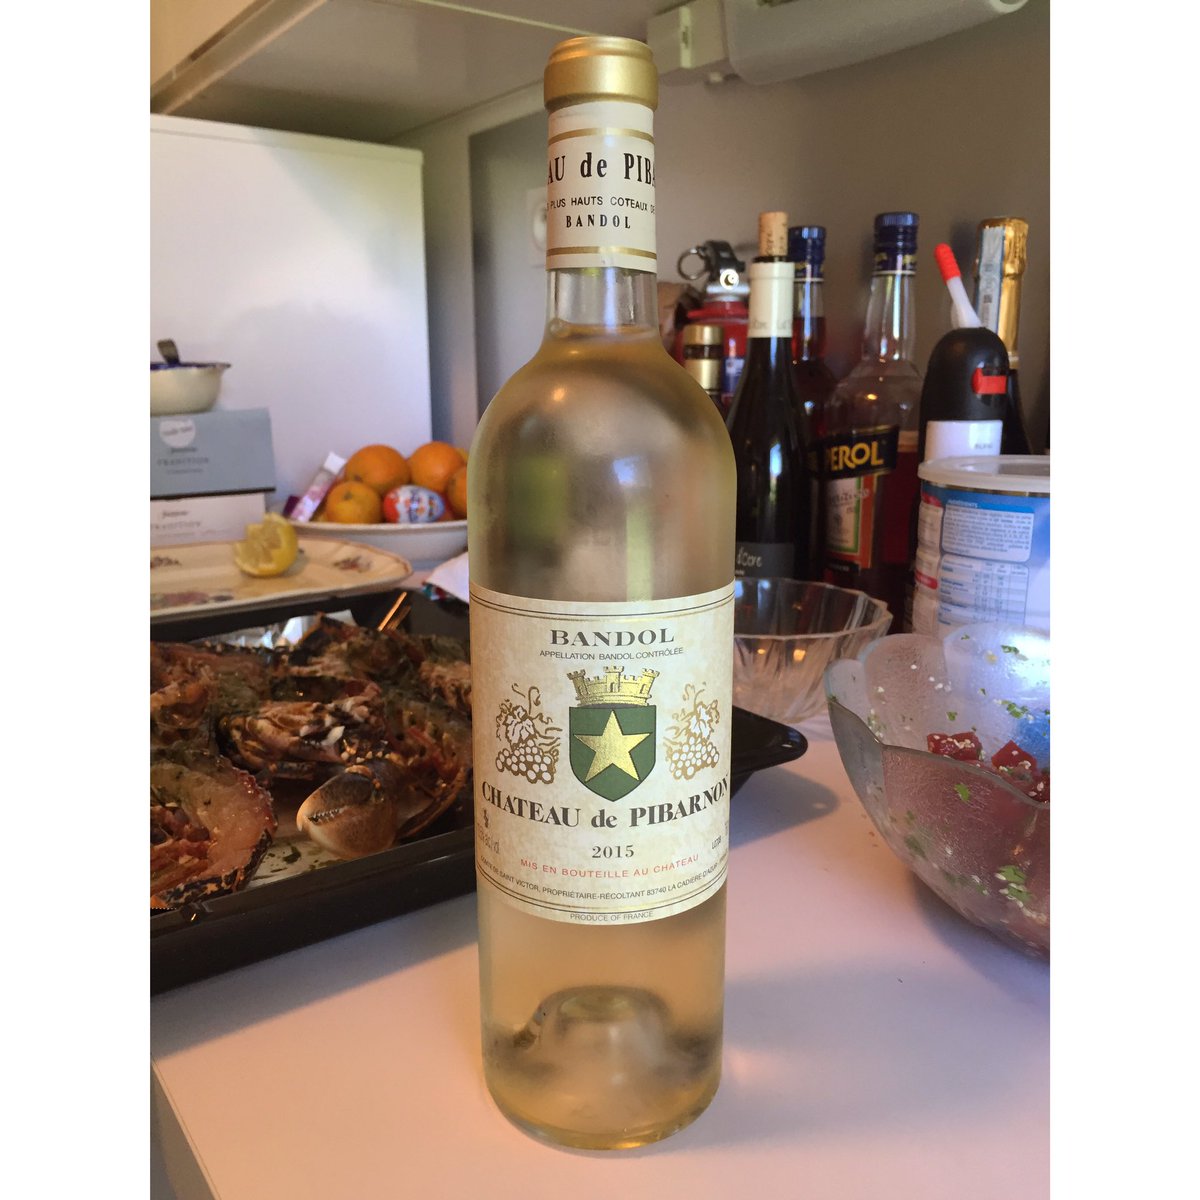 Vin blanc de Bandol, Château de Pibarnon 2015 #vinblancdebandol #châteaudepibarnon #soleildansunverre